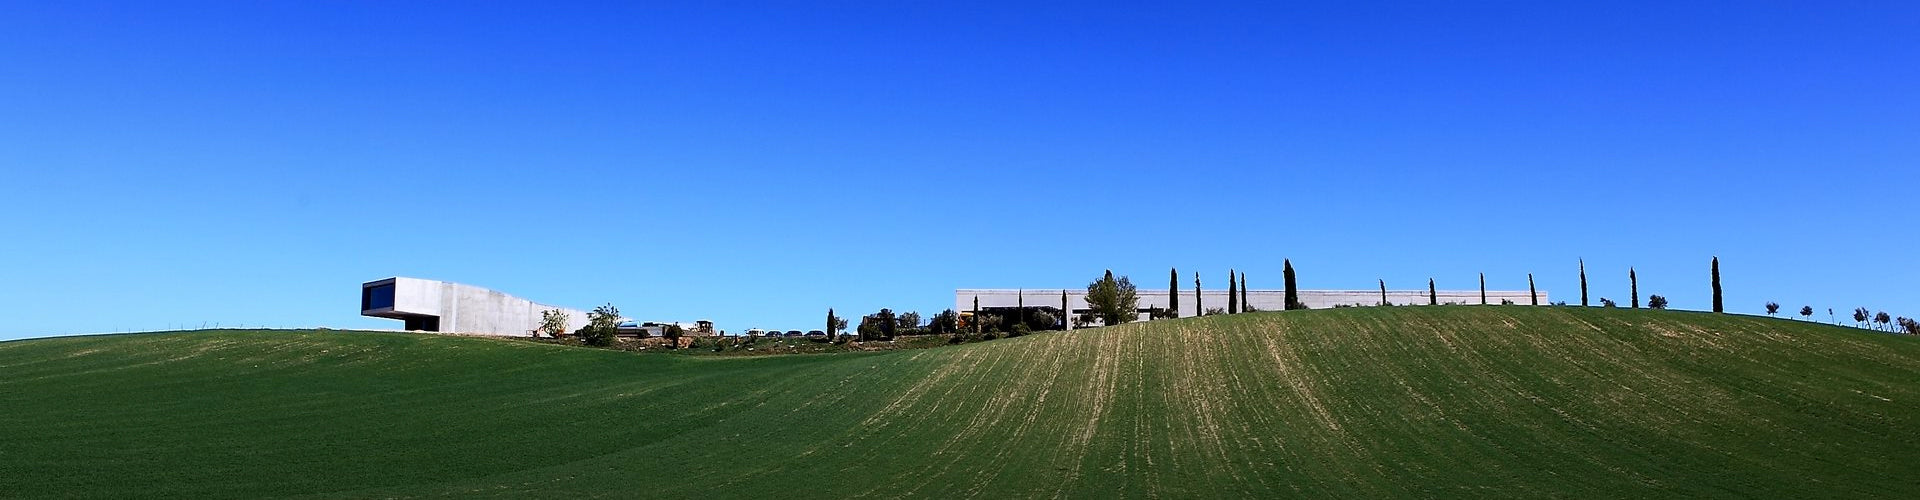 Belondrade Winery on the La Seca plateau in Rueda, Spain